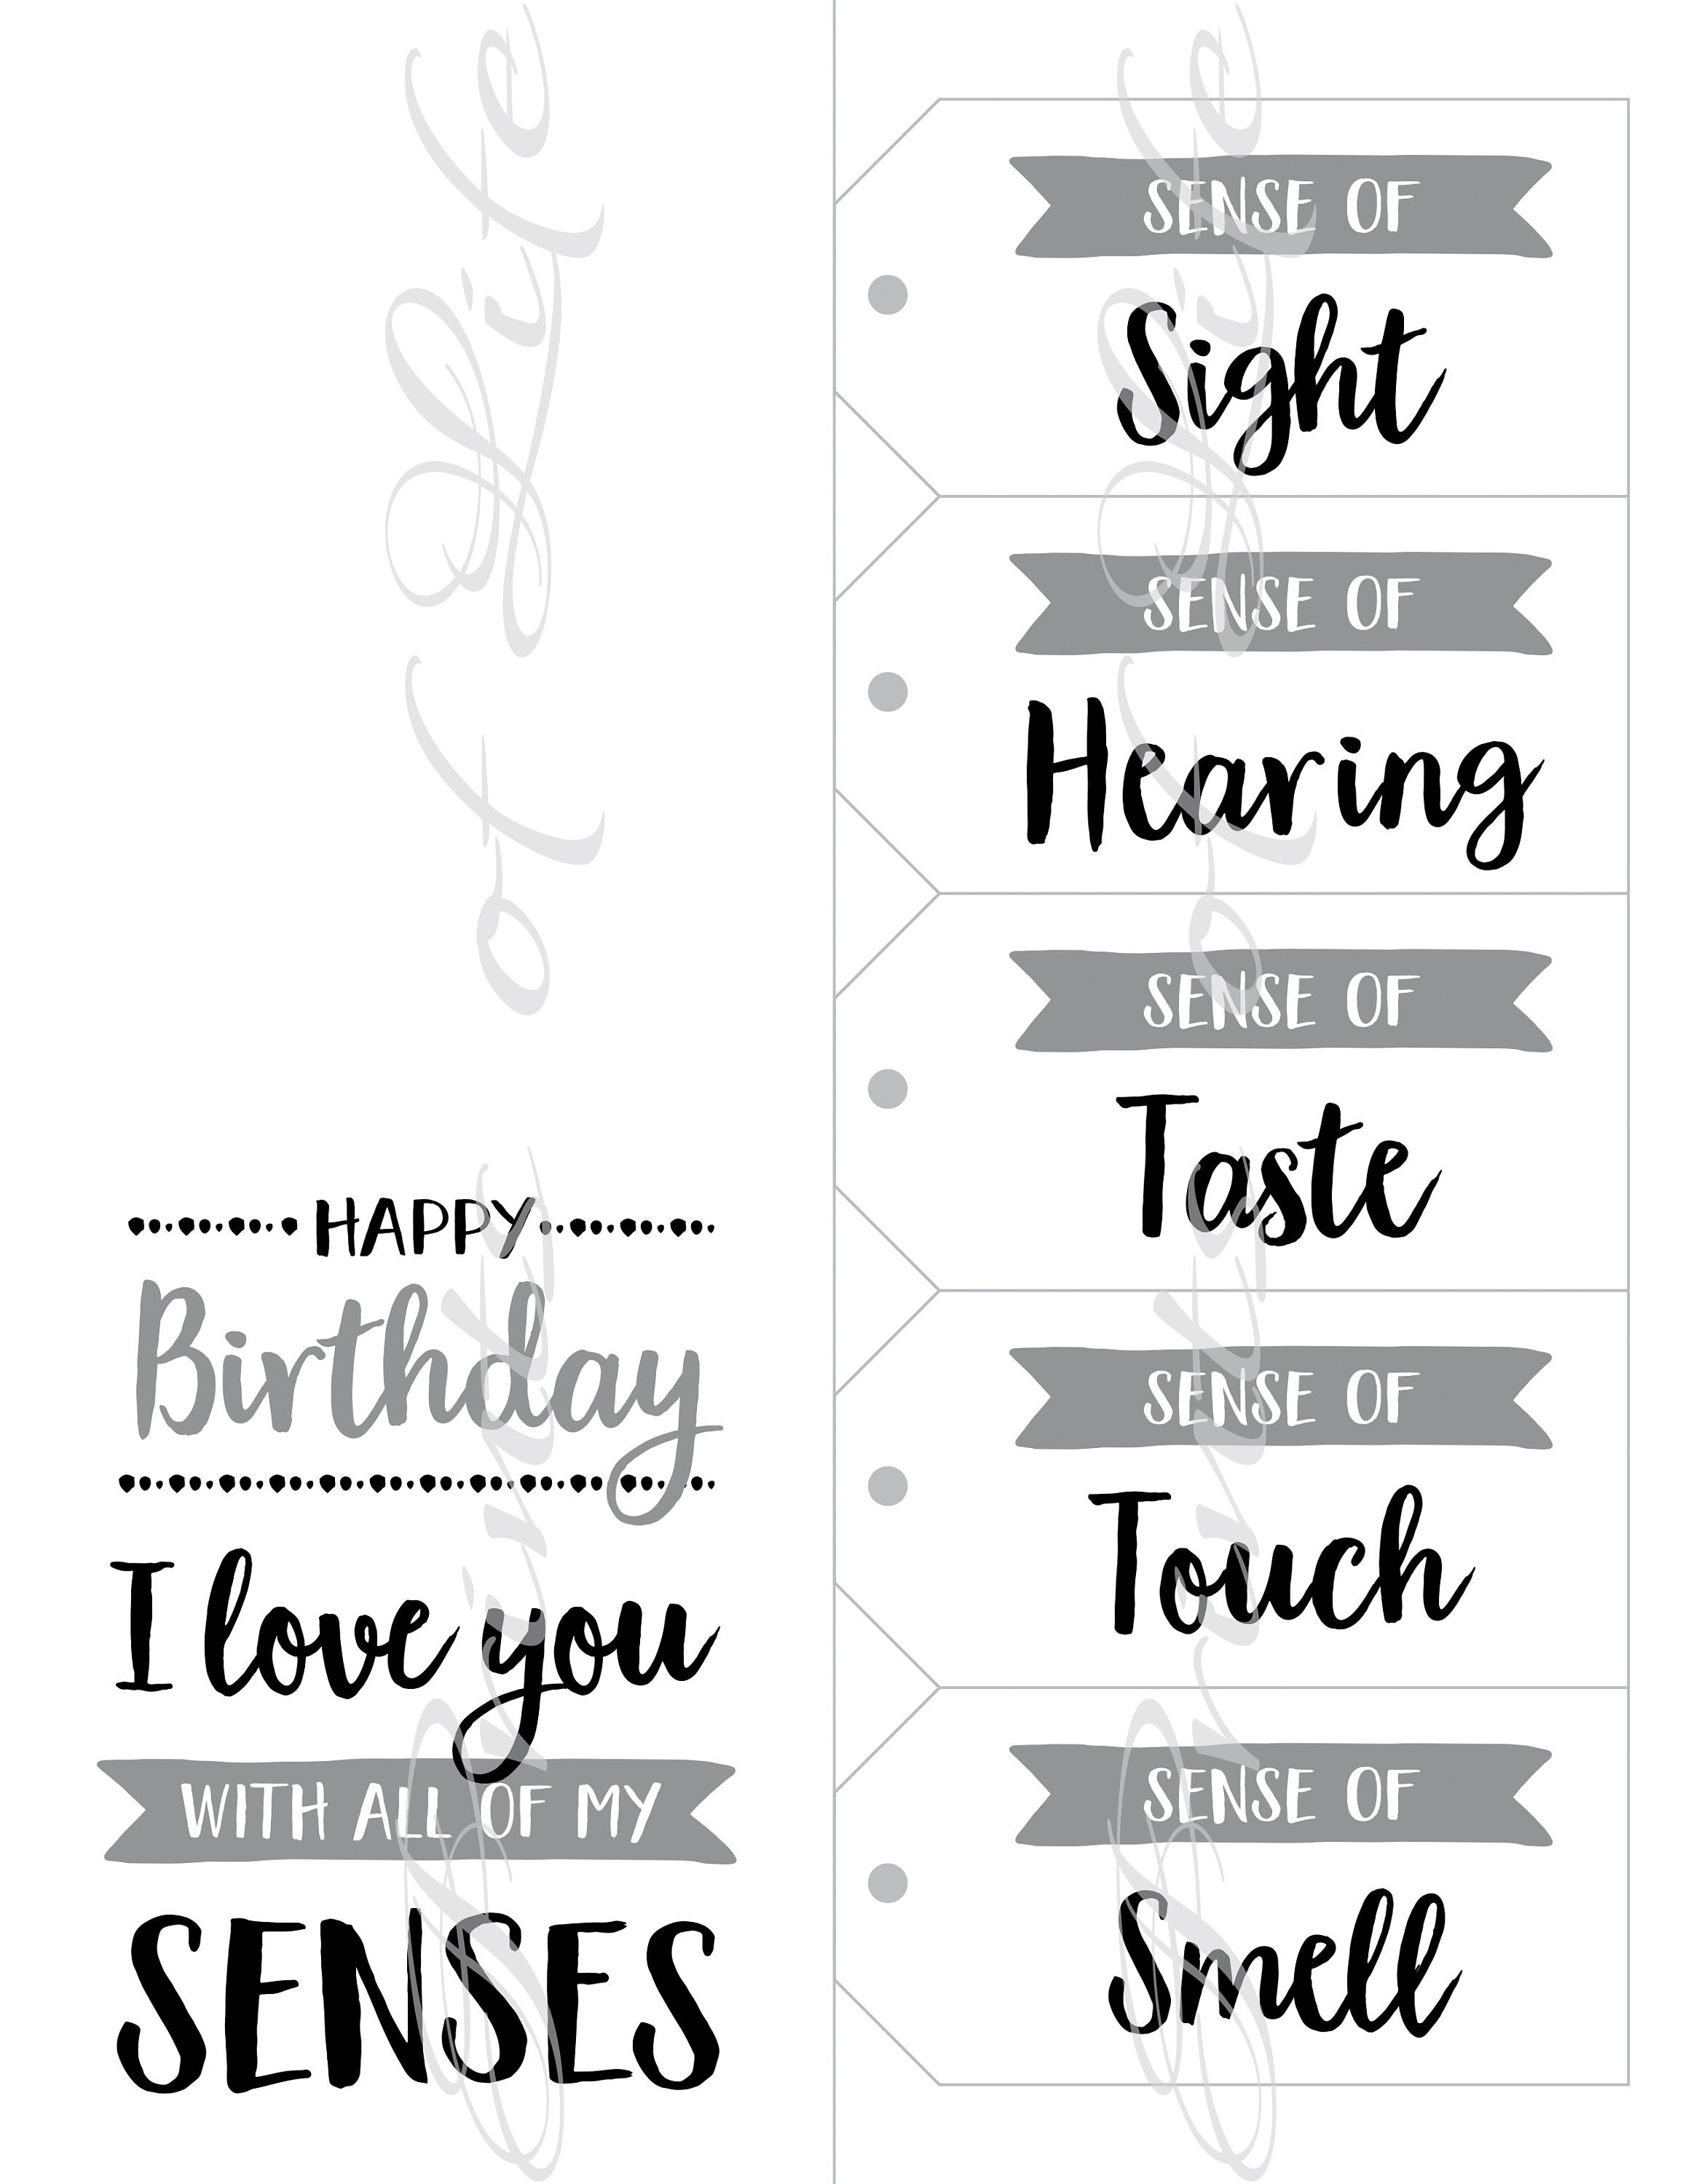 five-senses-gift-tags-free-printables-web-5-senses-gift-tags-birthday-card